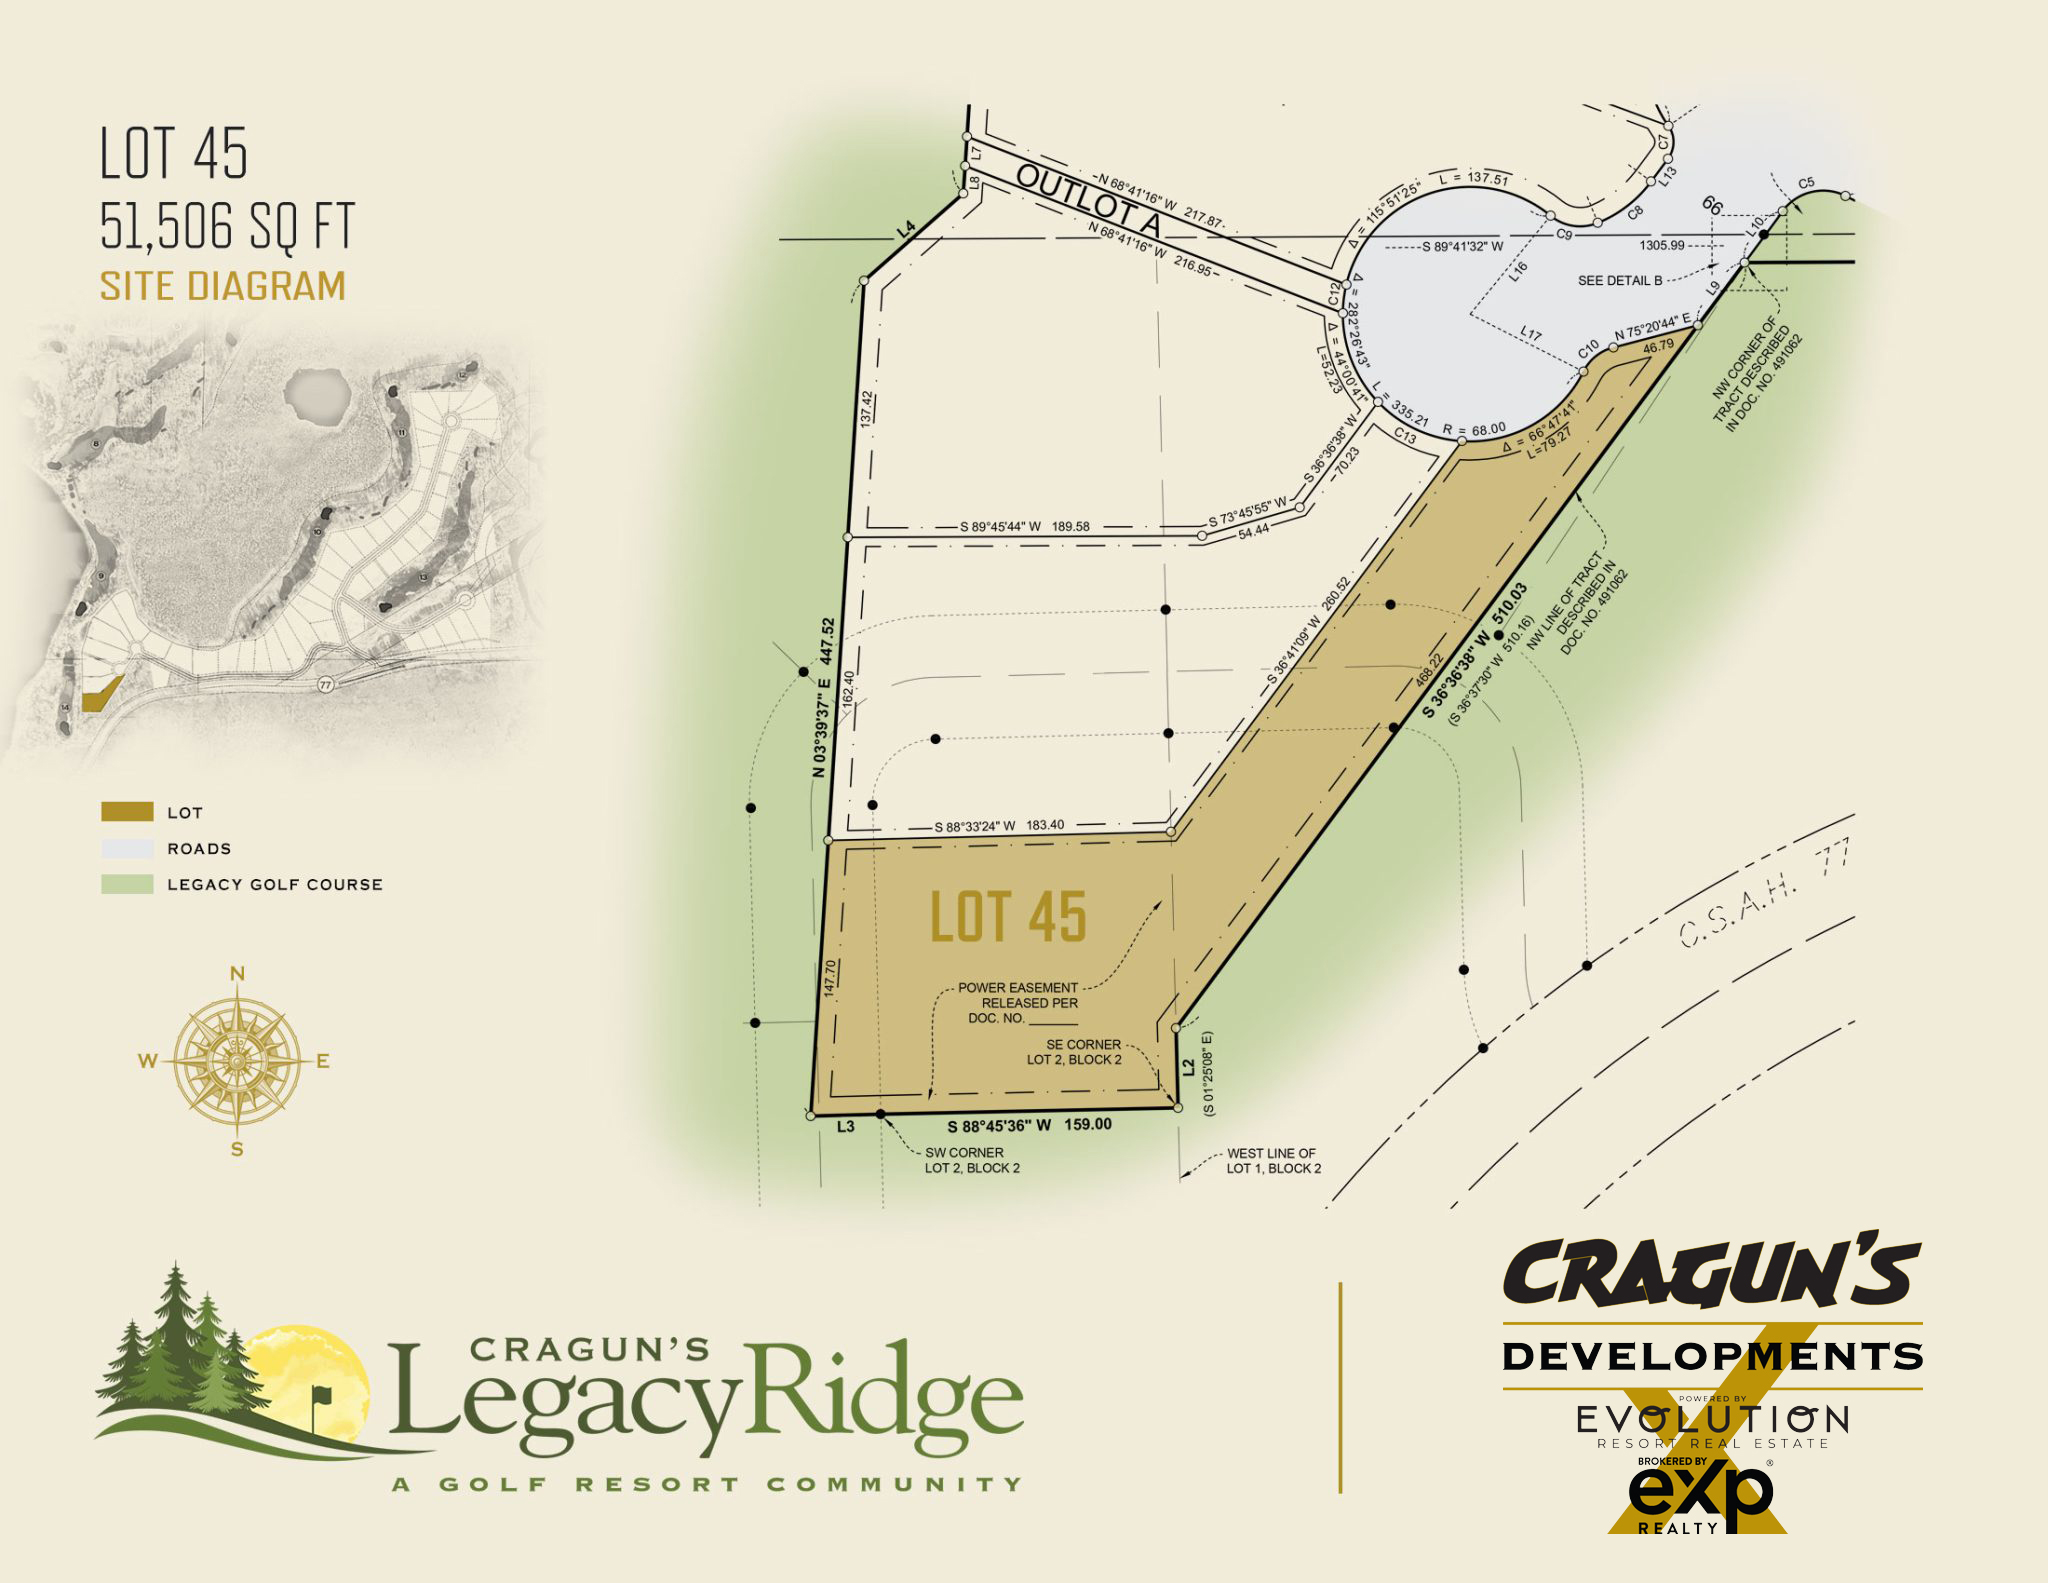 Legacy Ridge Lot 45 at Cragun's Developments in Brainerd, MN